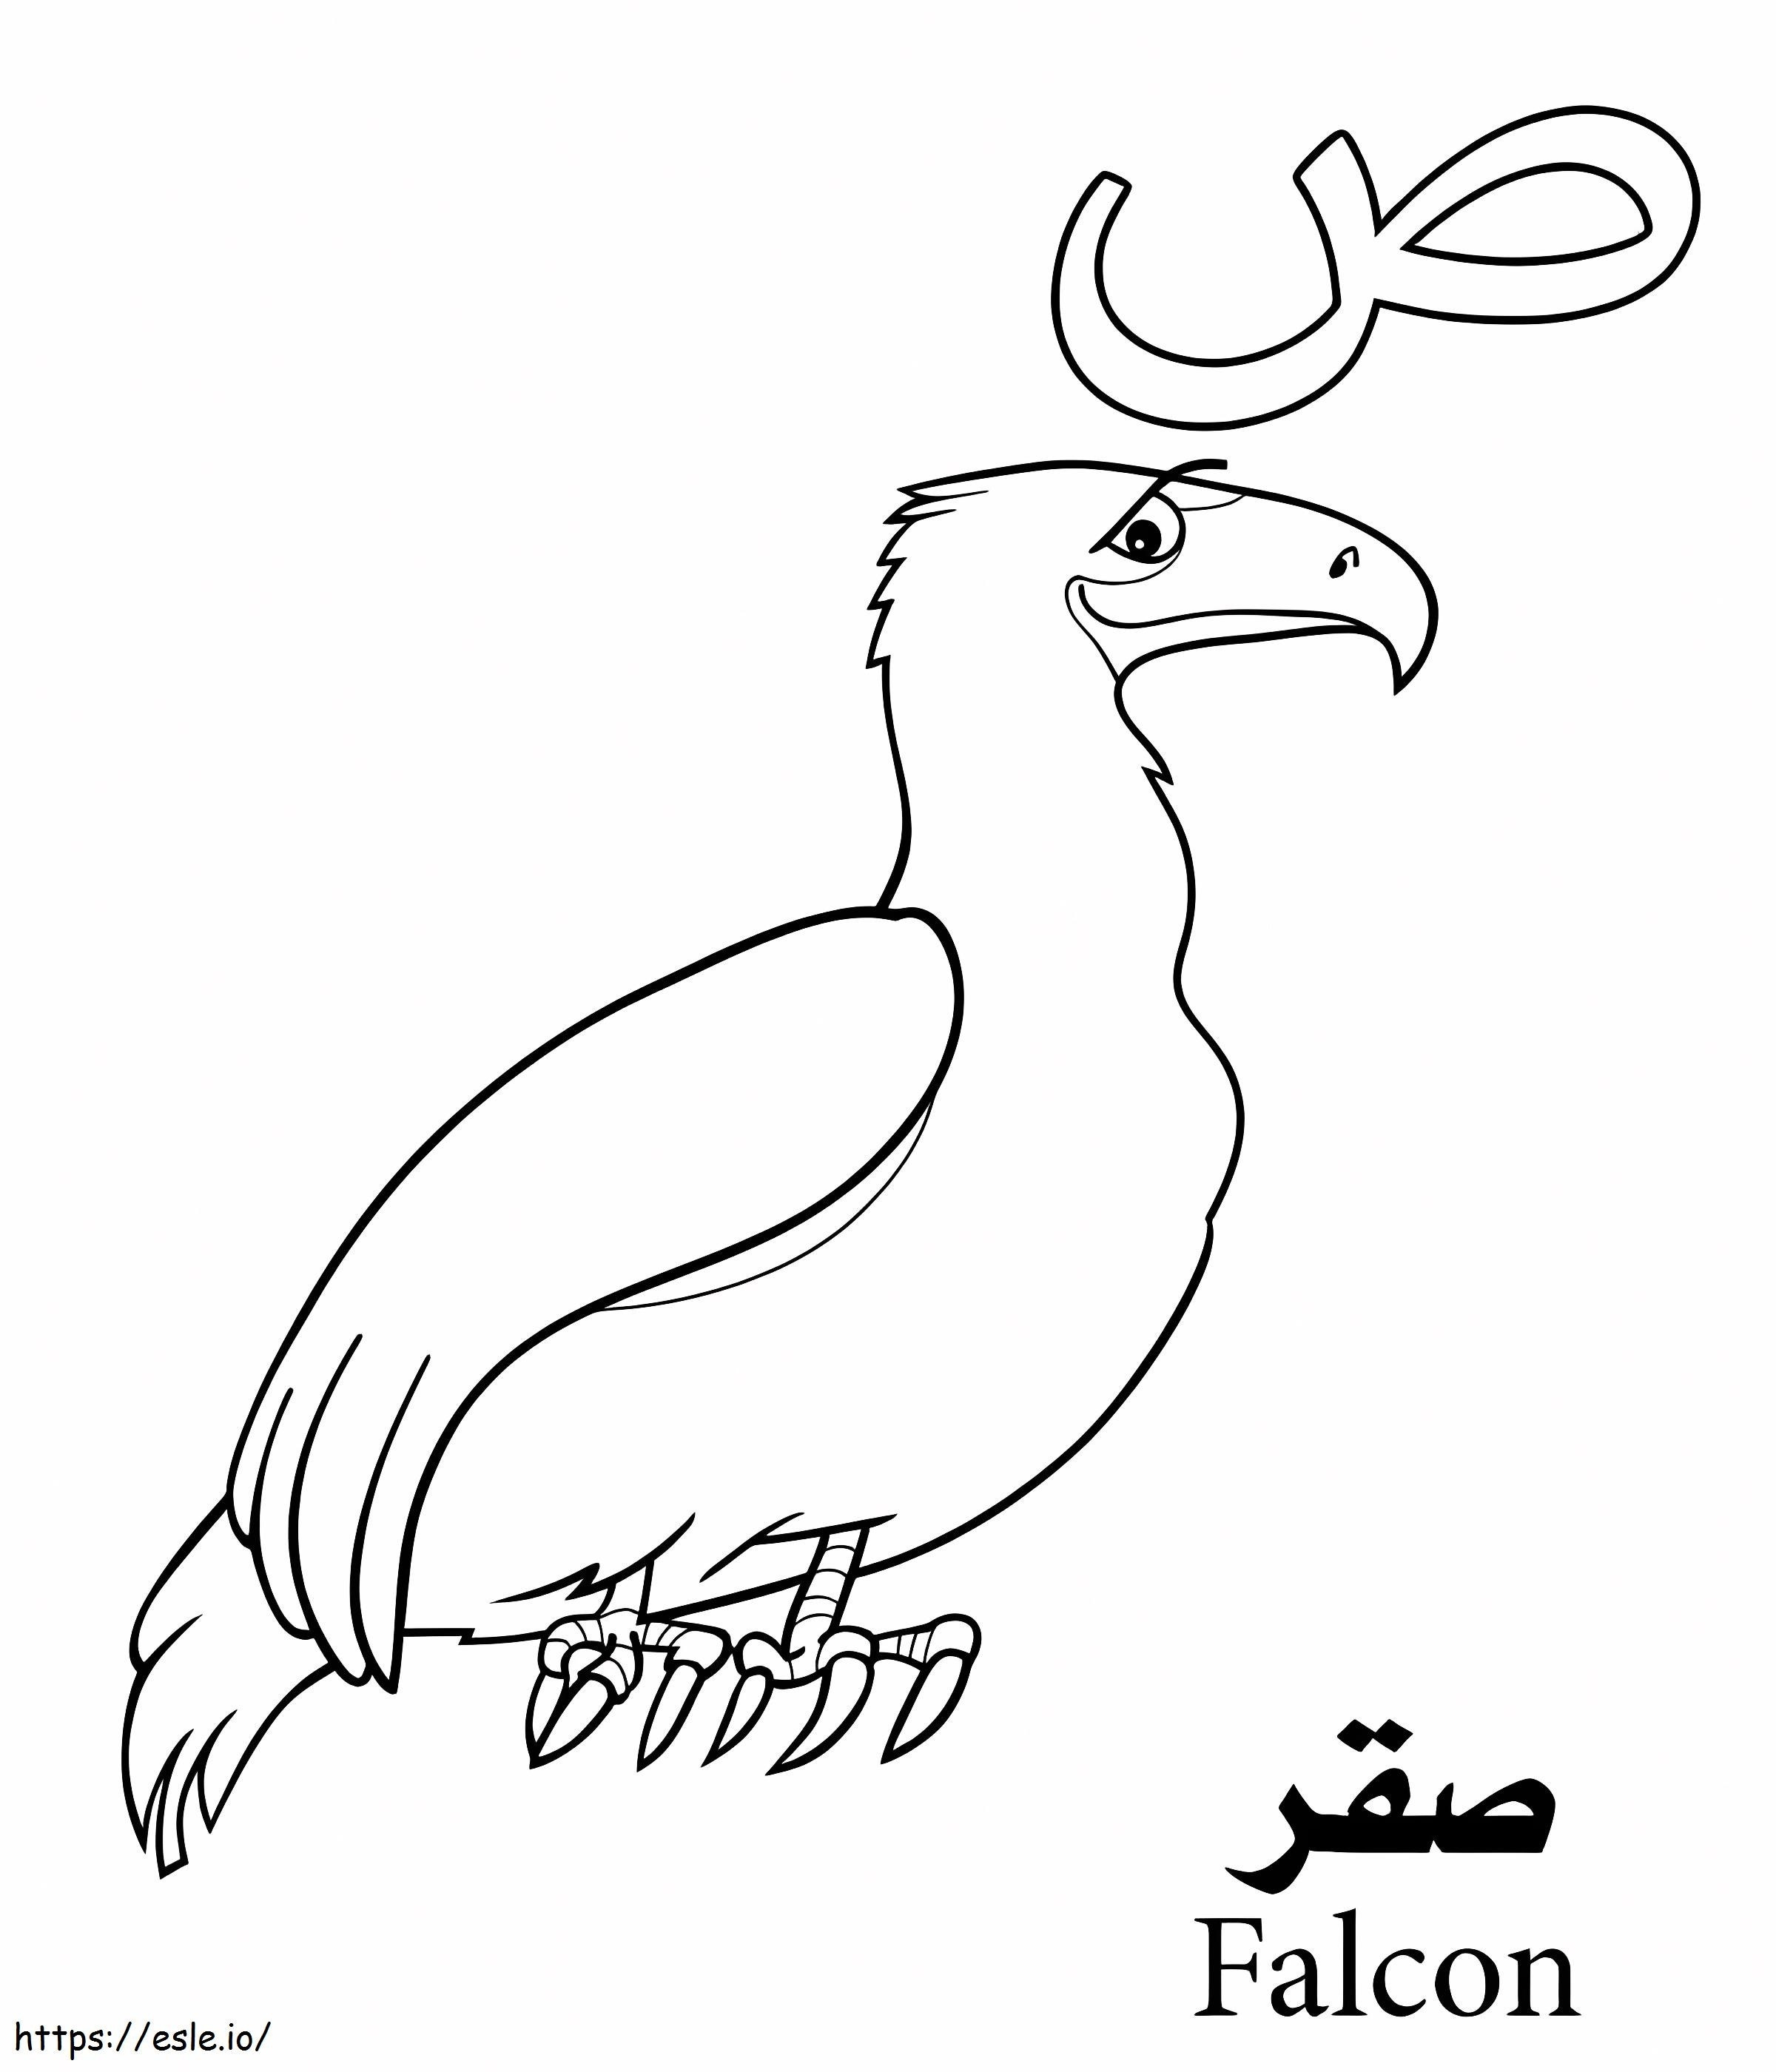 Falcon Arabic Alphabet coloring page